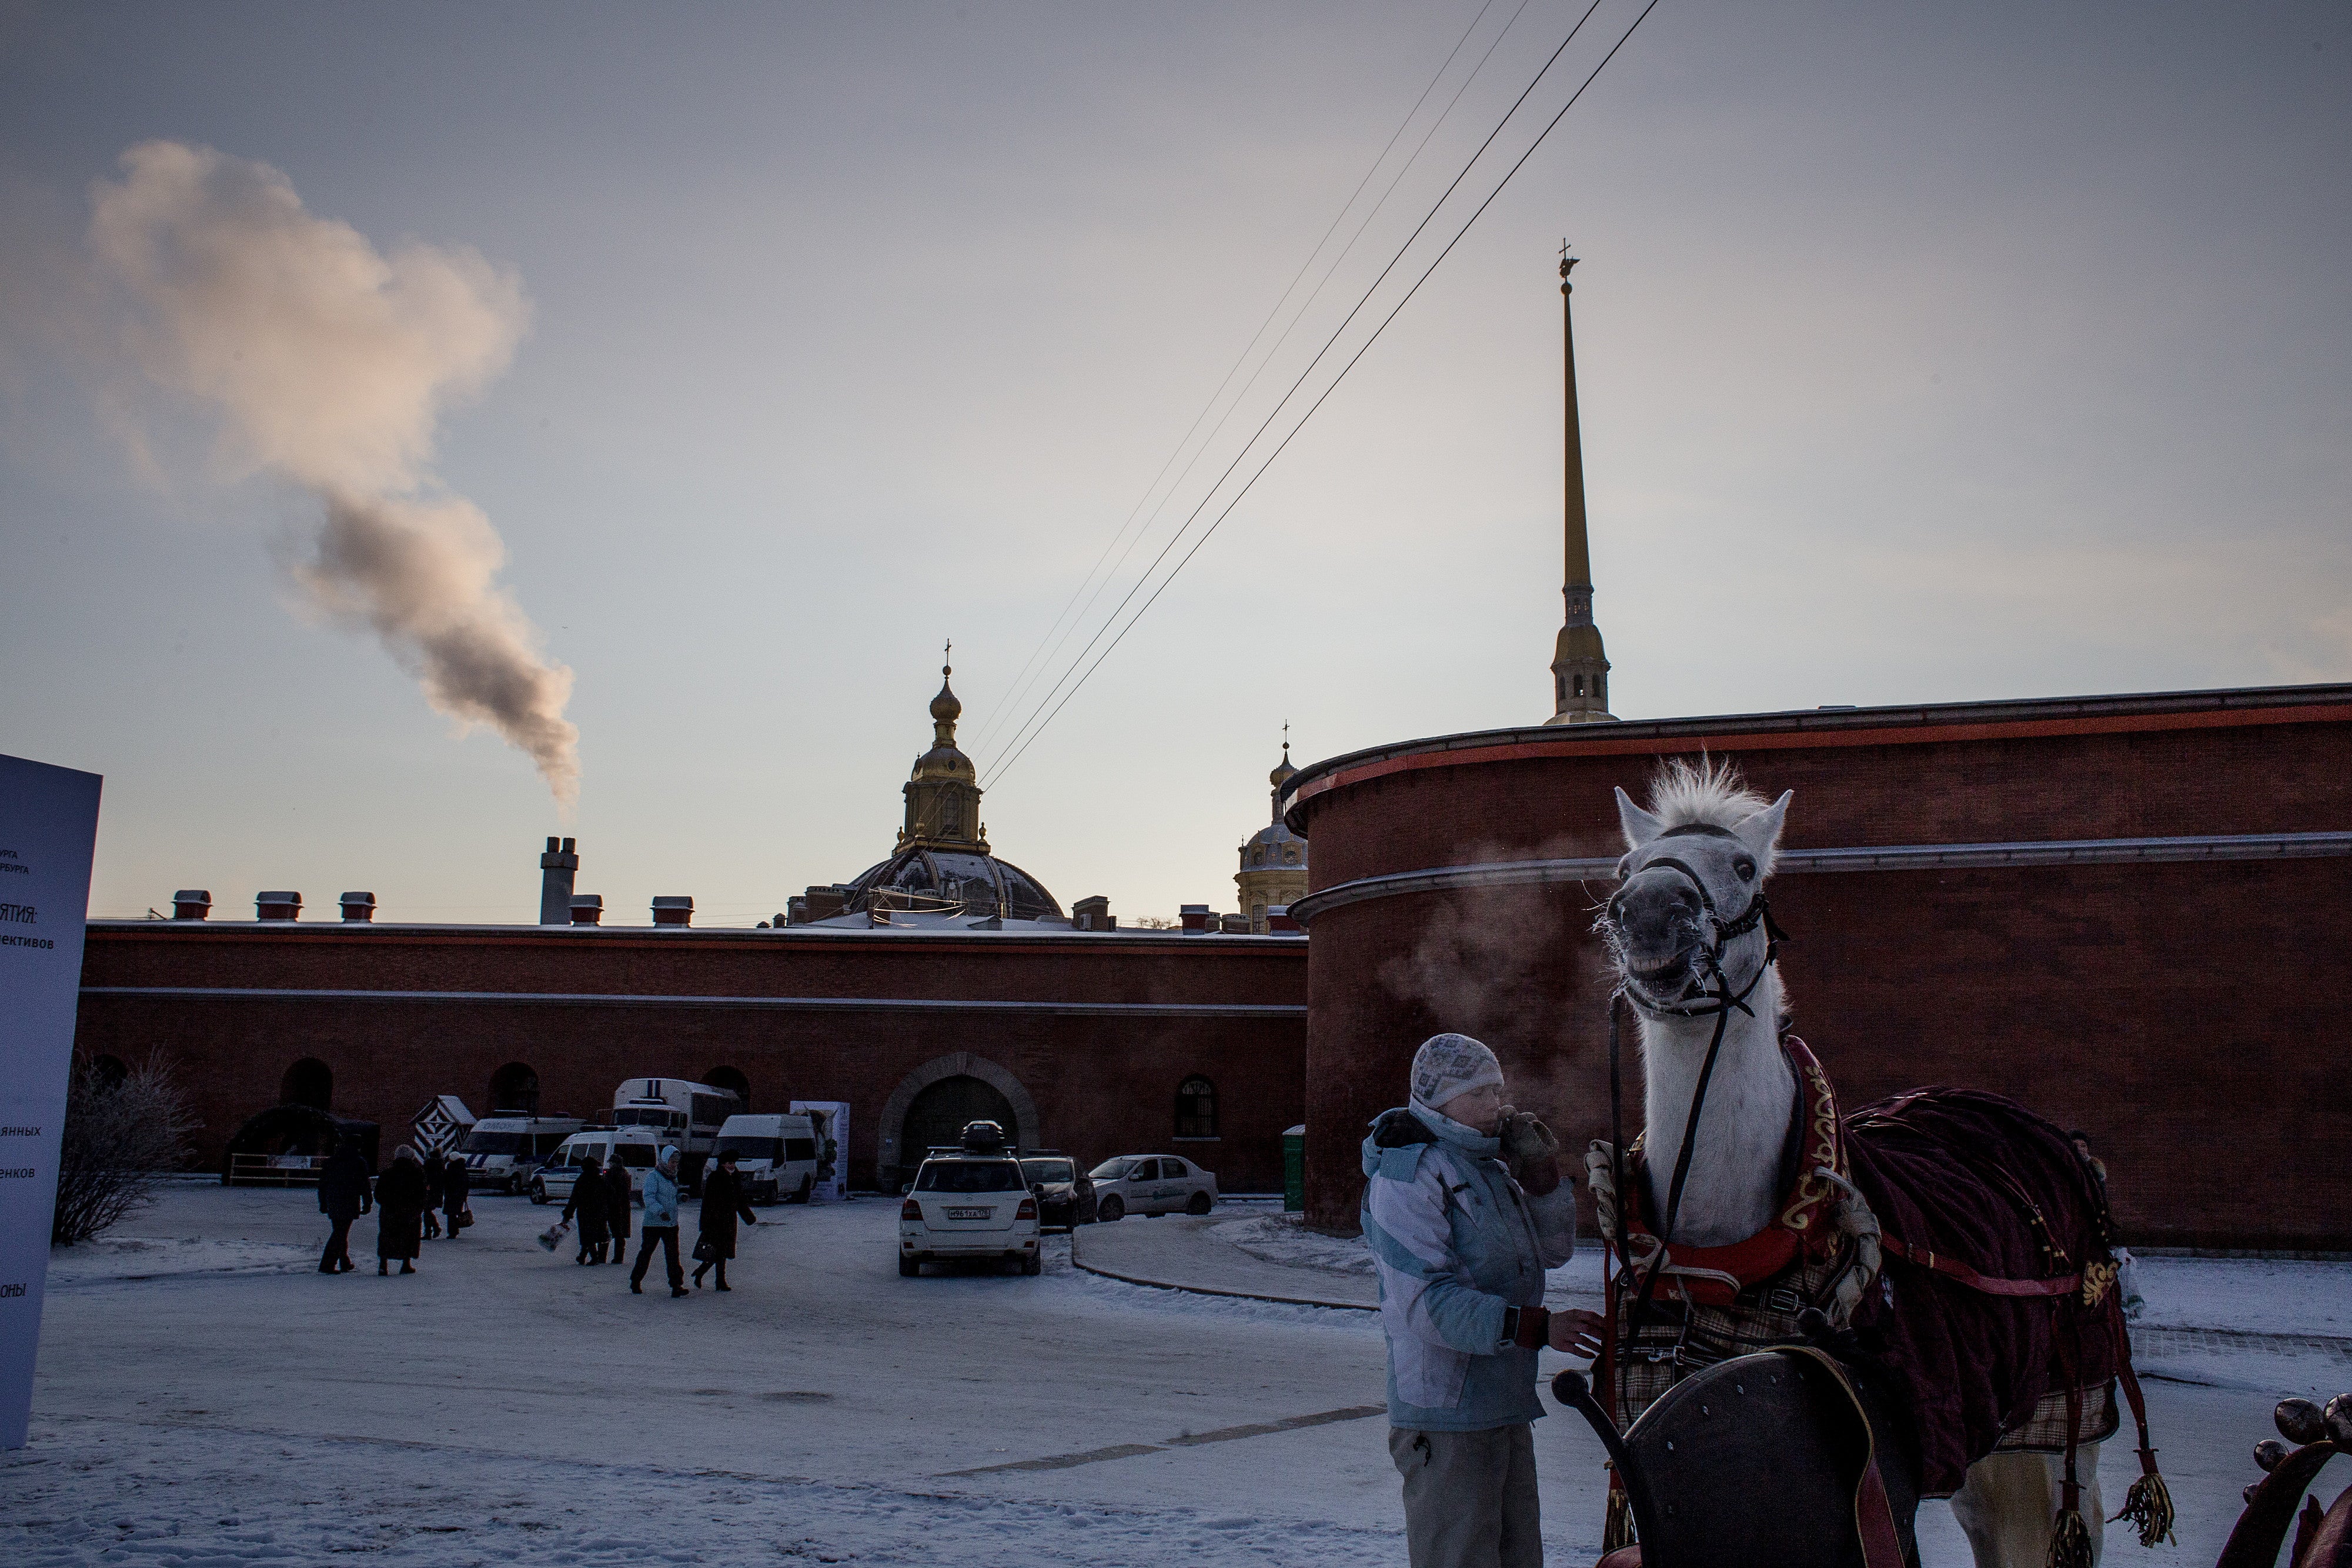 Horses are not unusual in St Petersburg